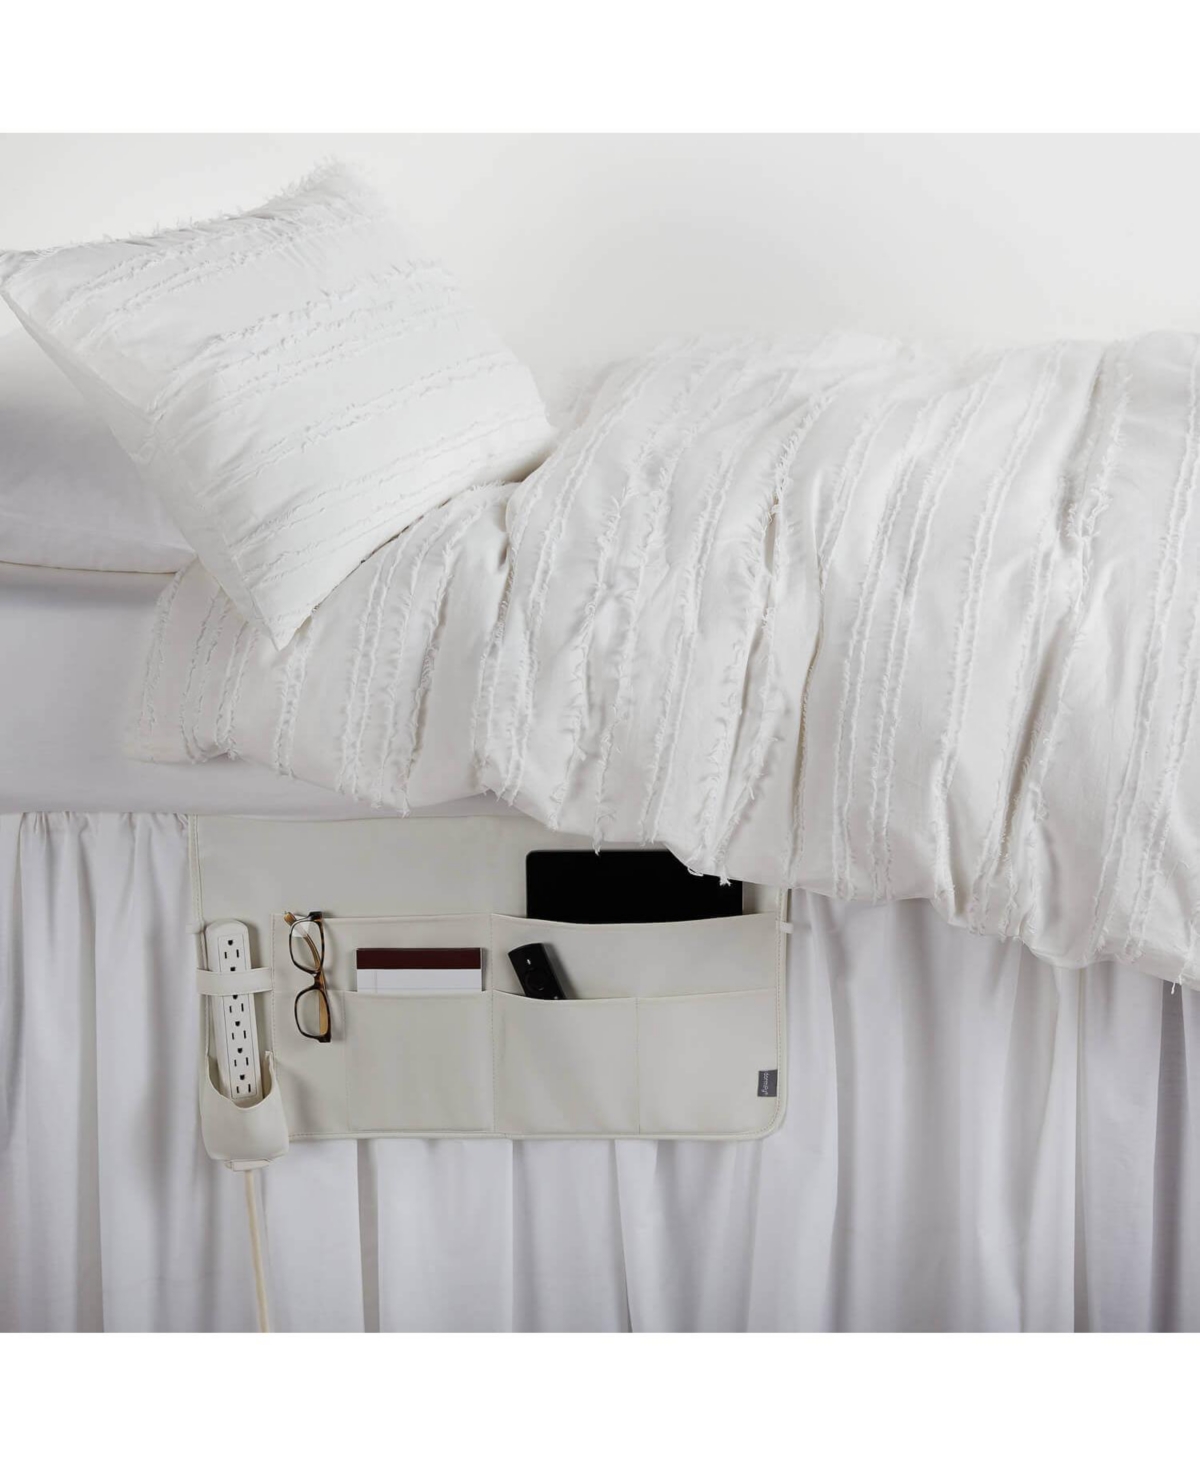 Luna Non-Slip Bedside Caddy, Versatile and Convenient - Luna white